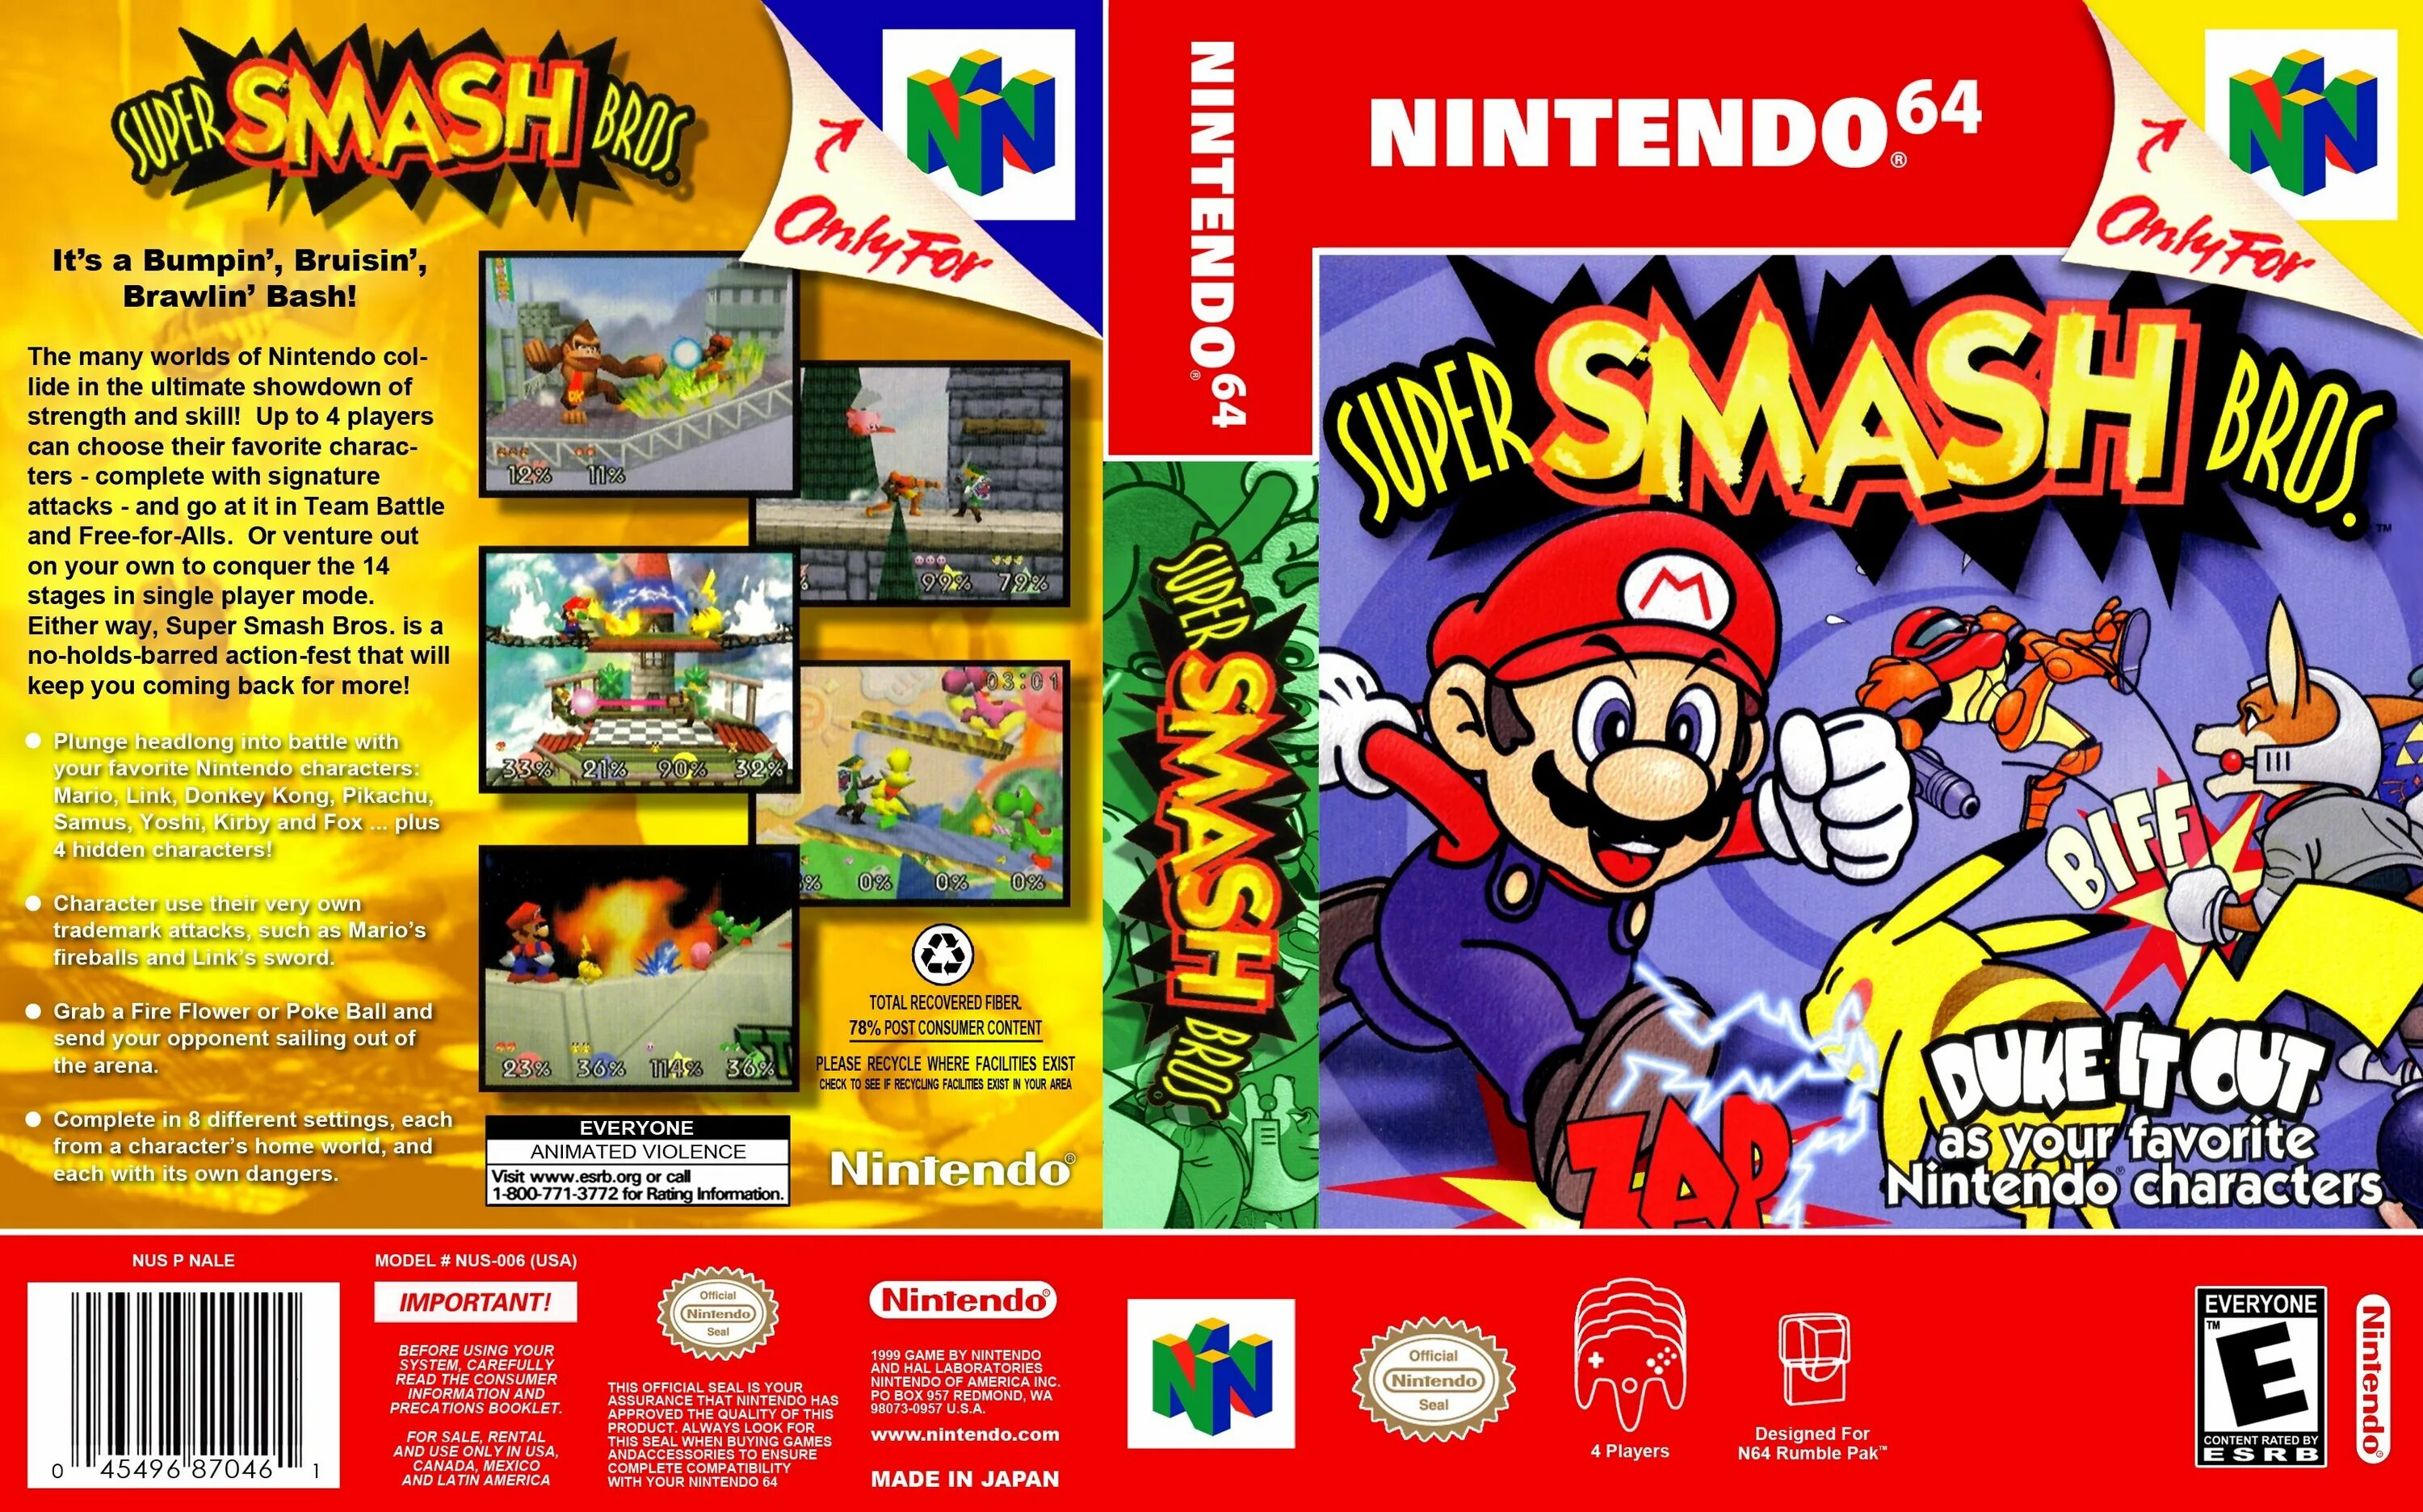 Nintendo 64 смэш БРОС. Супер Смаш БРОС Нинтендо 64. Super Smash Bros на Нинтендо 64. Super Smash Bros Nintendo 64. Nintendo 64 roms